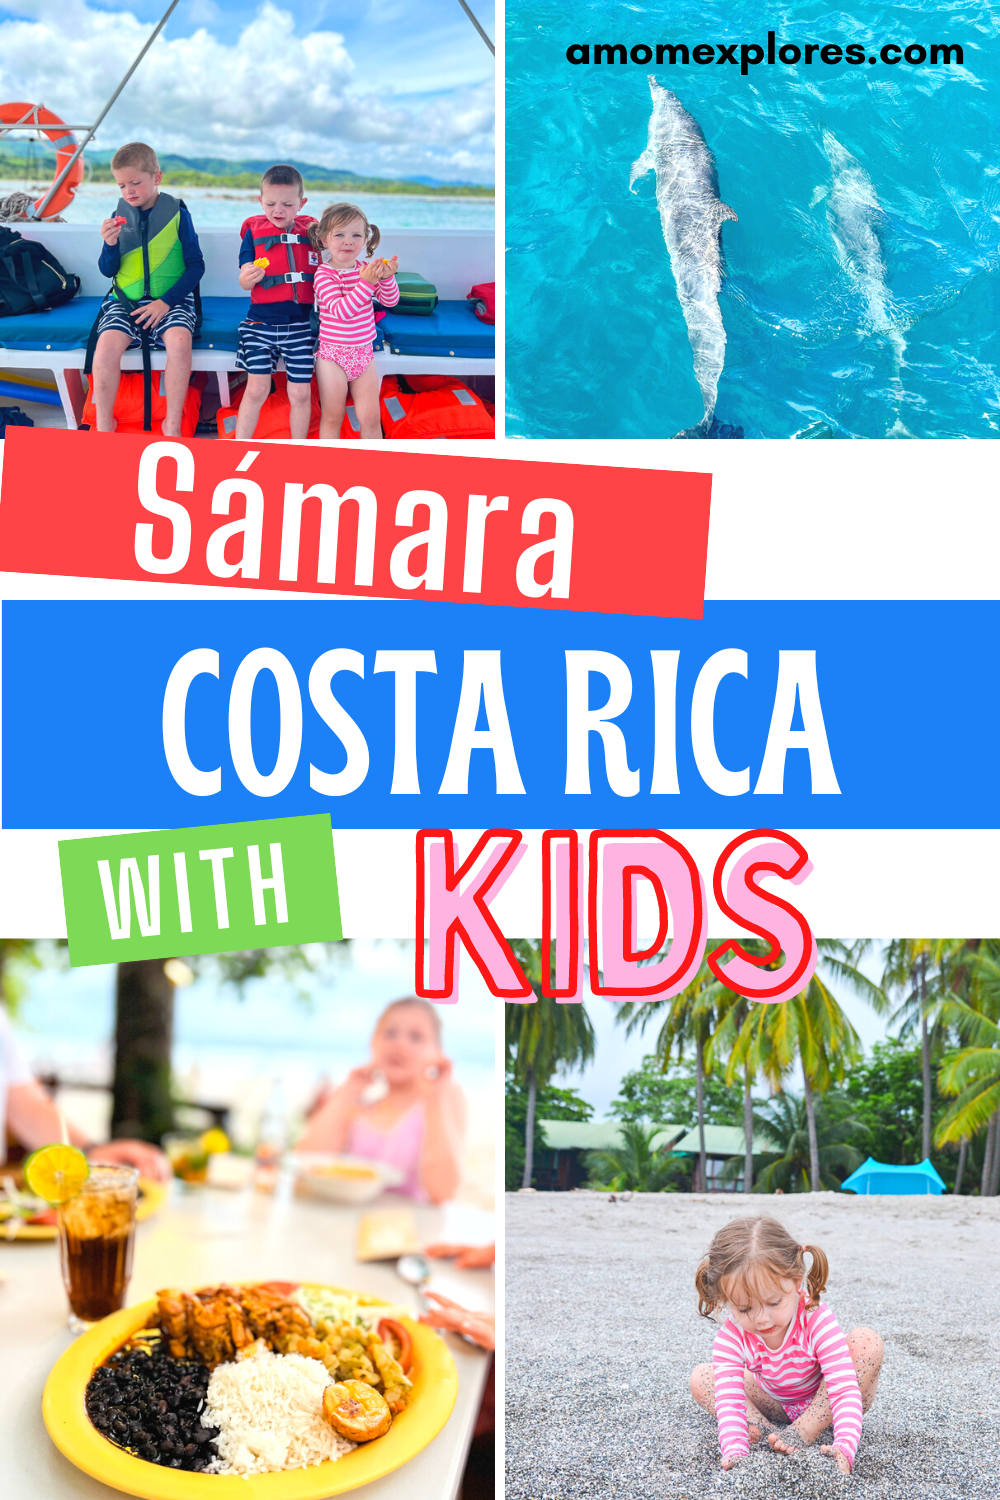 Samara Costa Rica Guanacaste Province with Kids.png